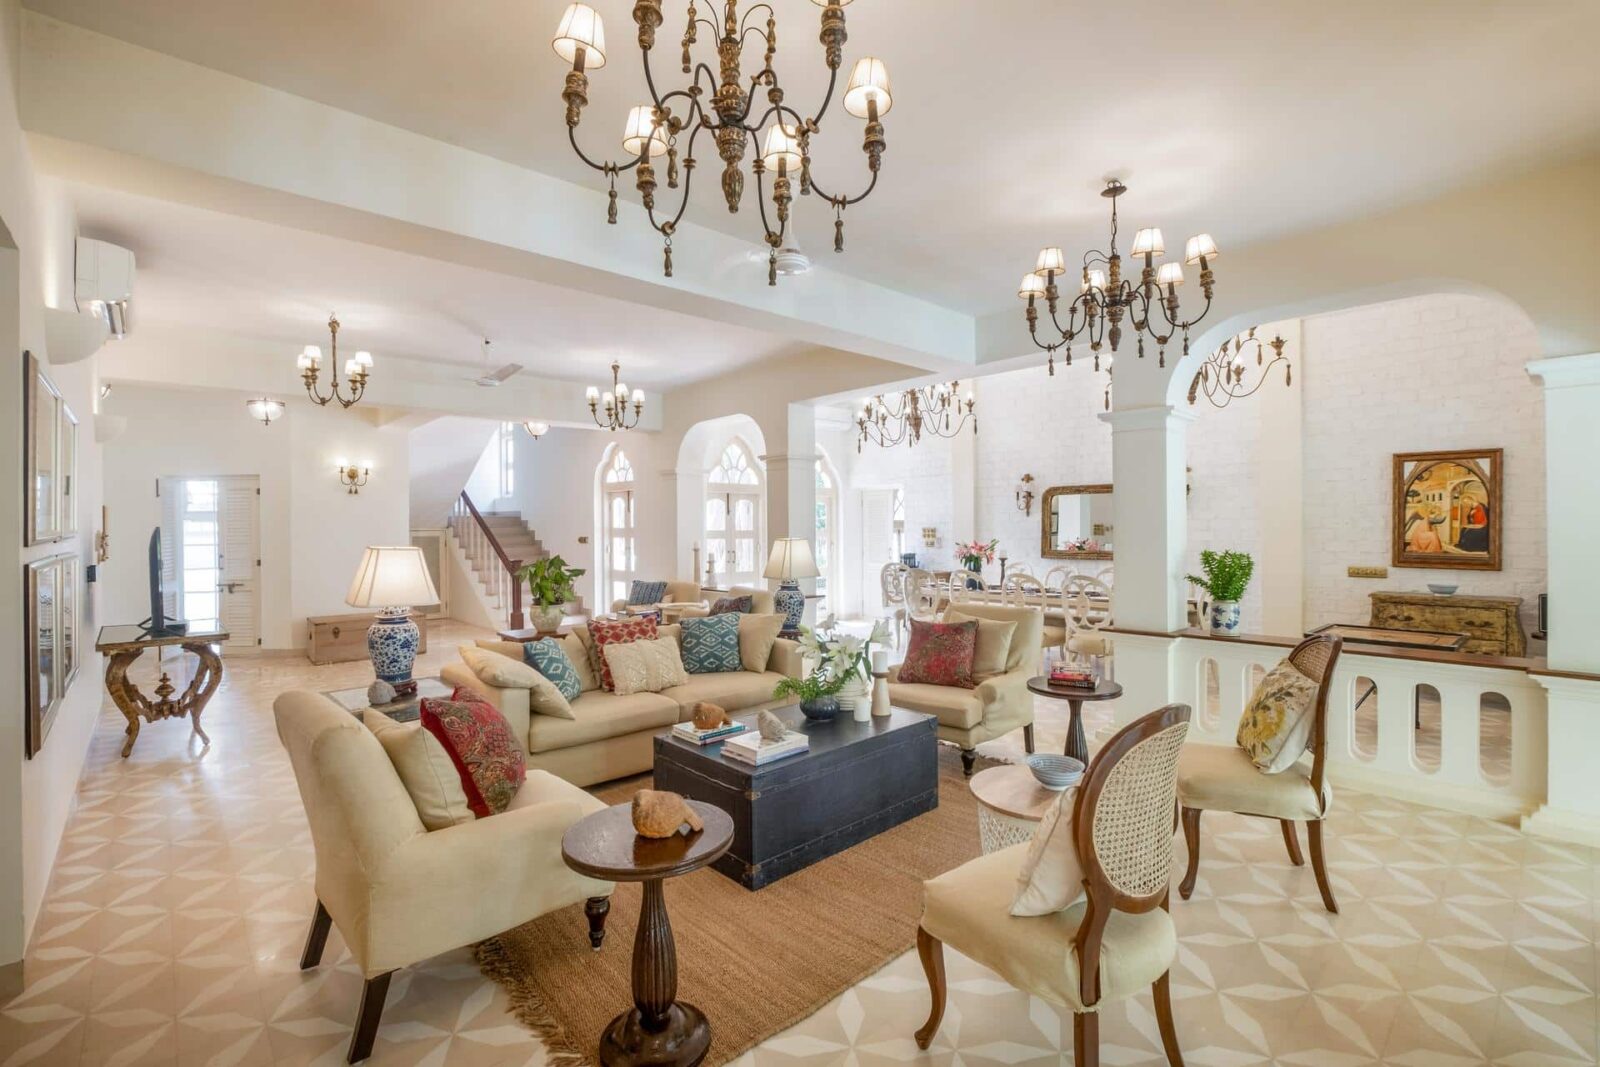 Villa Vivre - Bungalows in Goa for Sale - Elegant Living Room